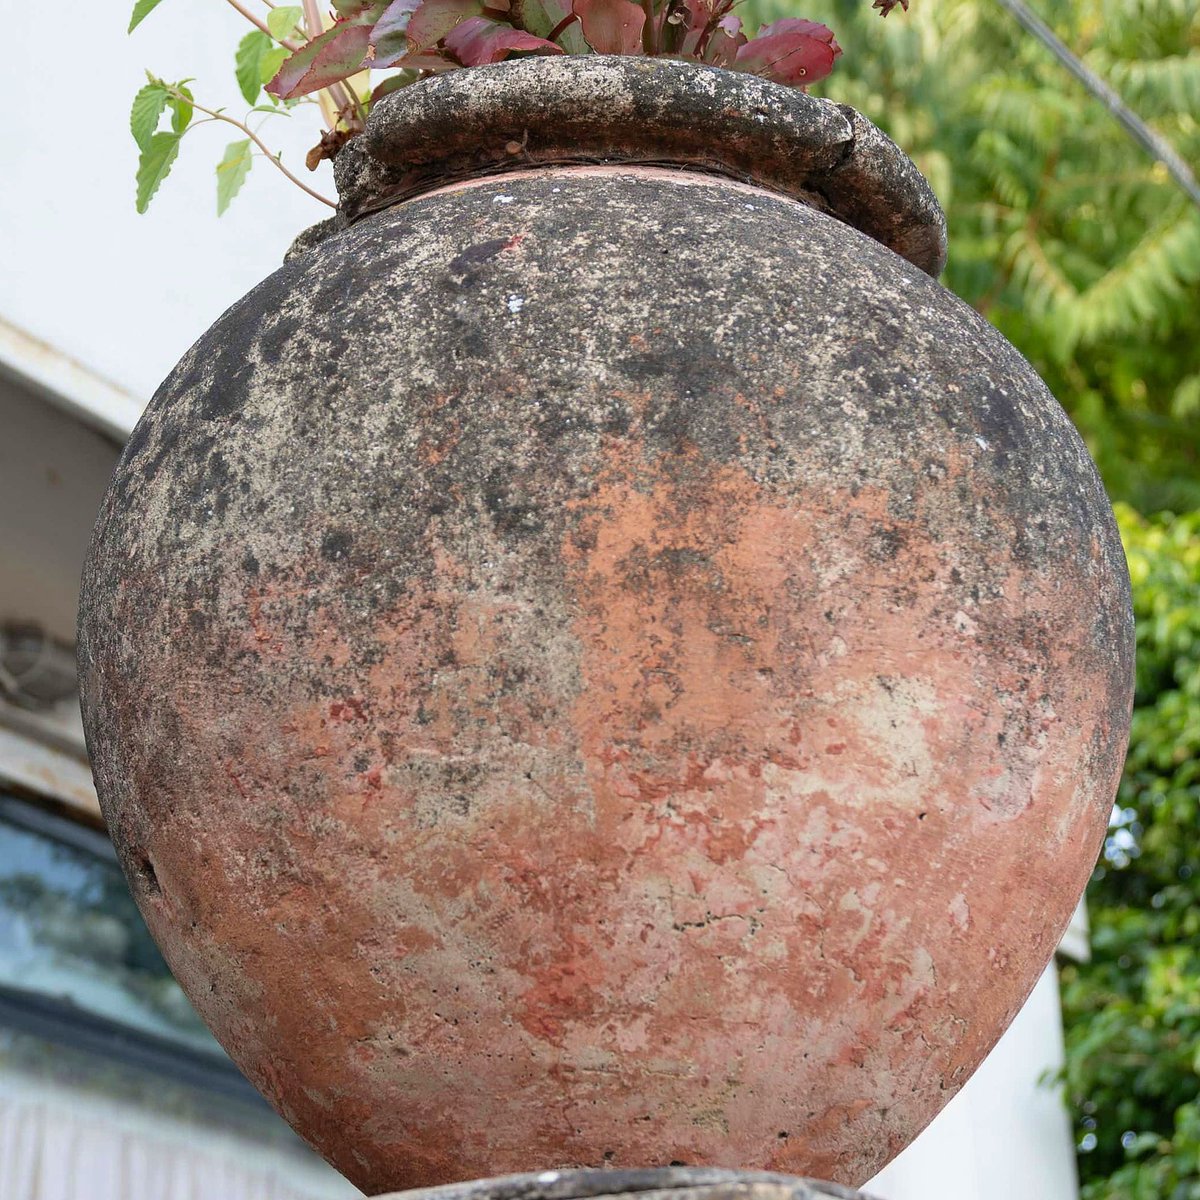 An aged, corroded pottery vessel.

#ref #reference #artreference #rust  #artist #texturereference #texturethings #moss #3d #refs #blender #fyp #digitalartist #blender3d  #scifi  #3dart #details #rustything #detail #rustydetail #3ddetail